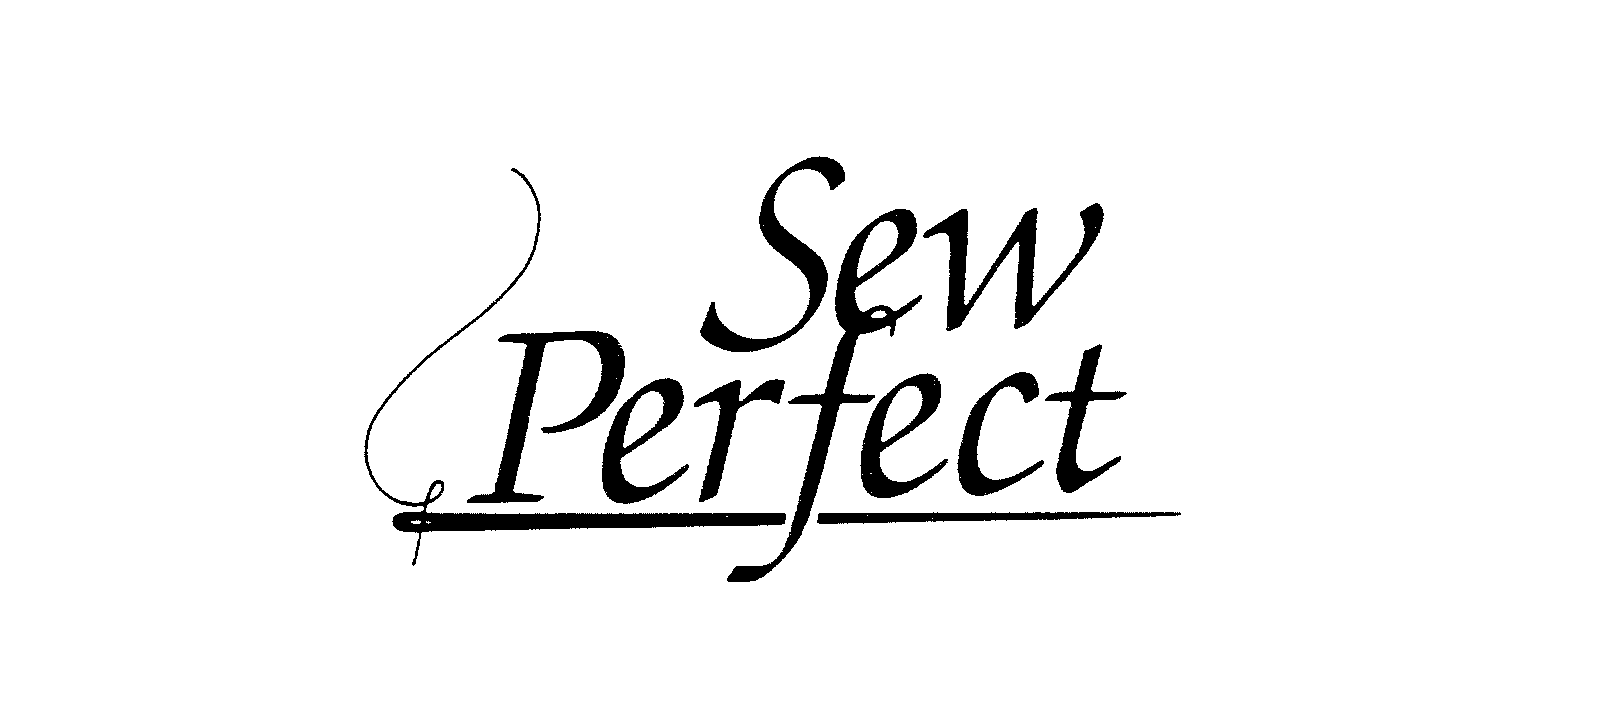 SEW PERFECT